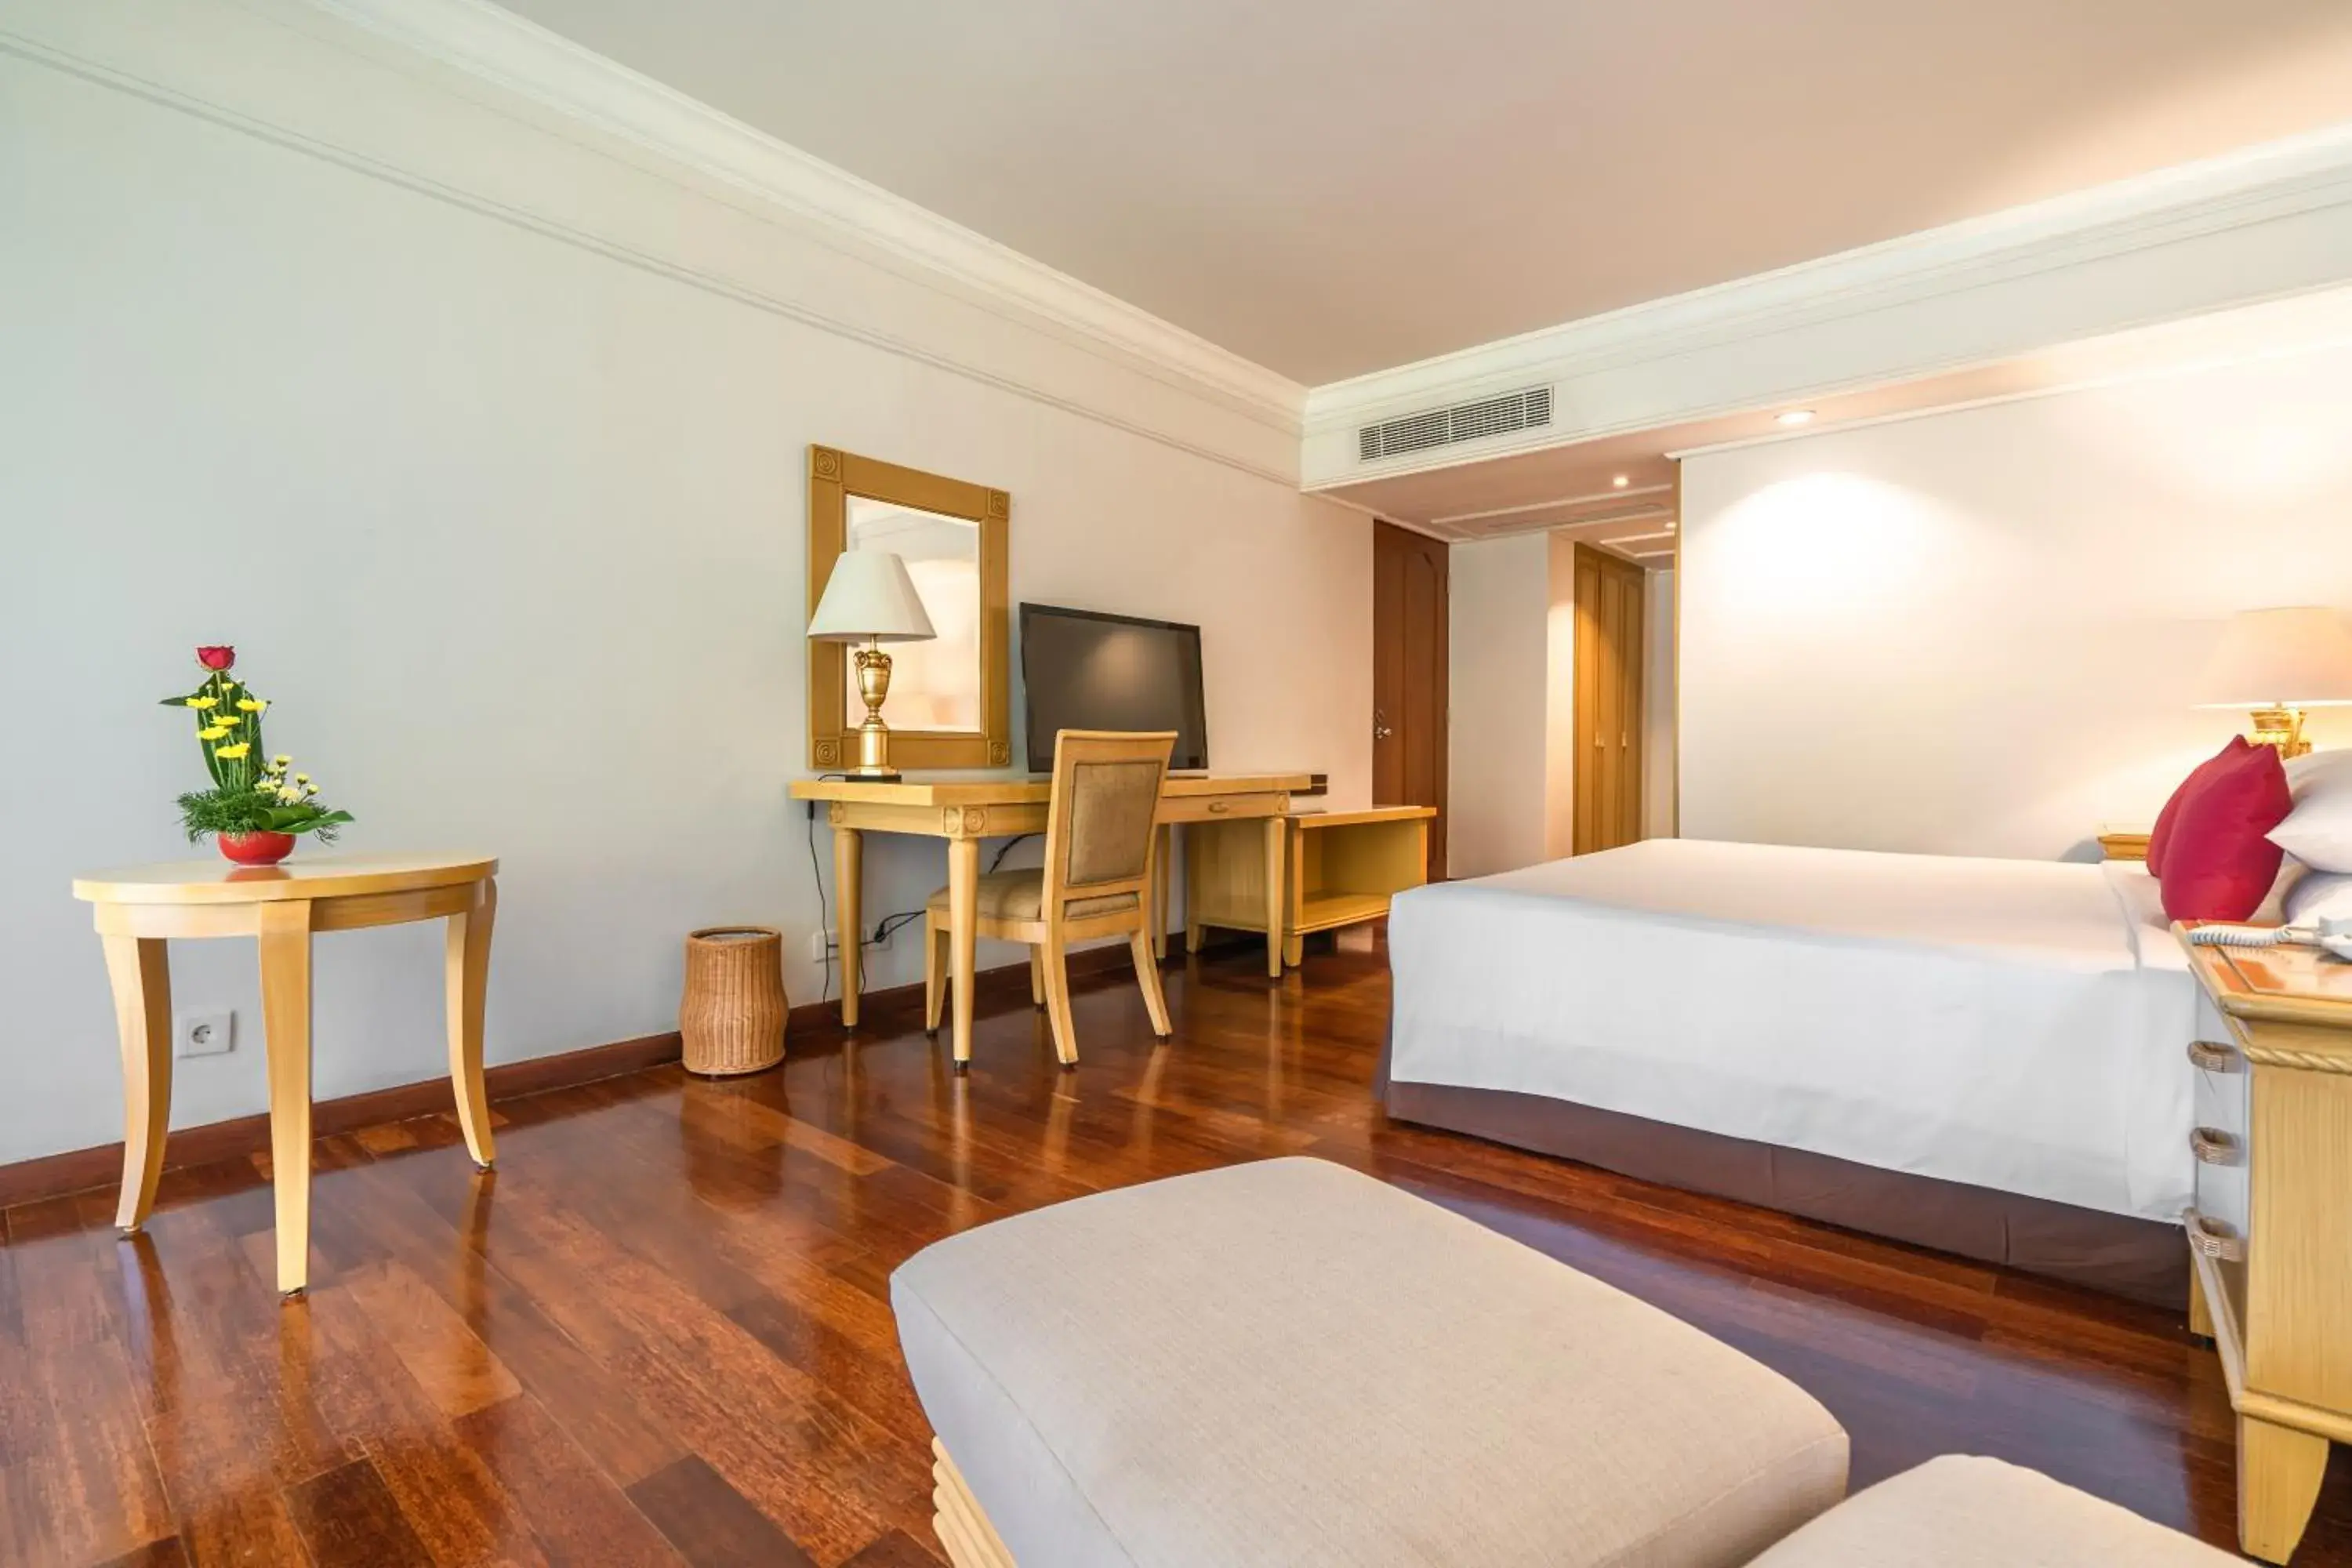 Bedroom in Bintang Bali Resort